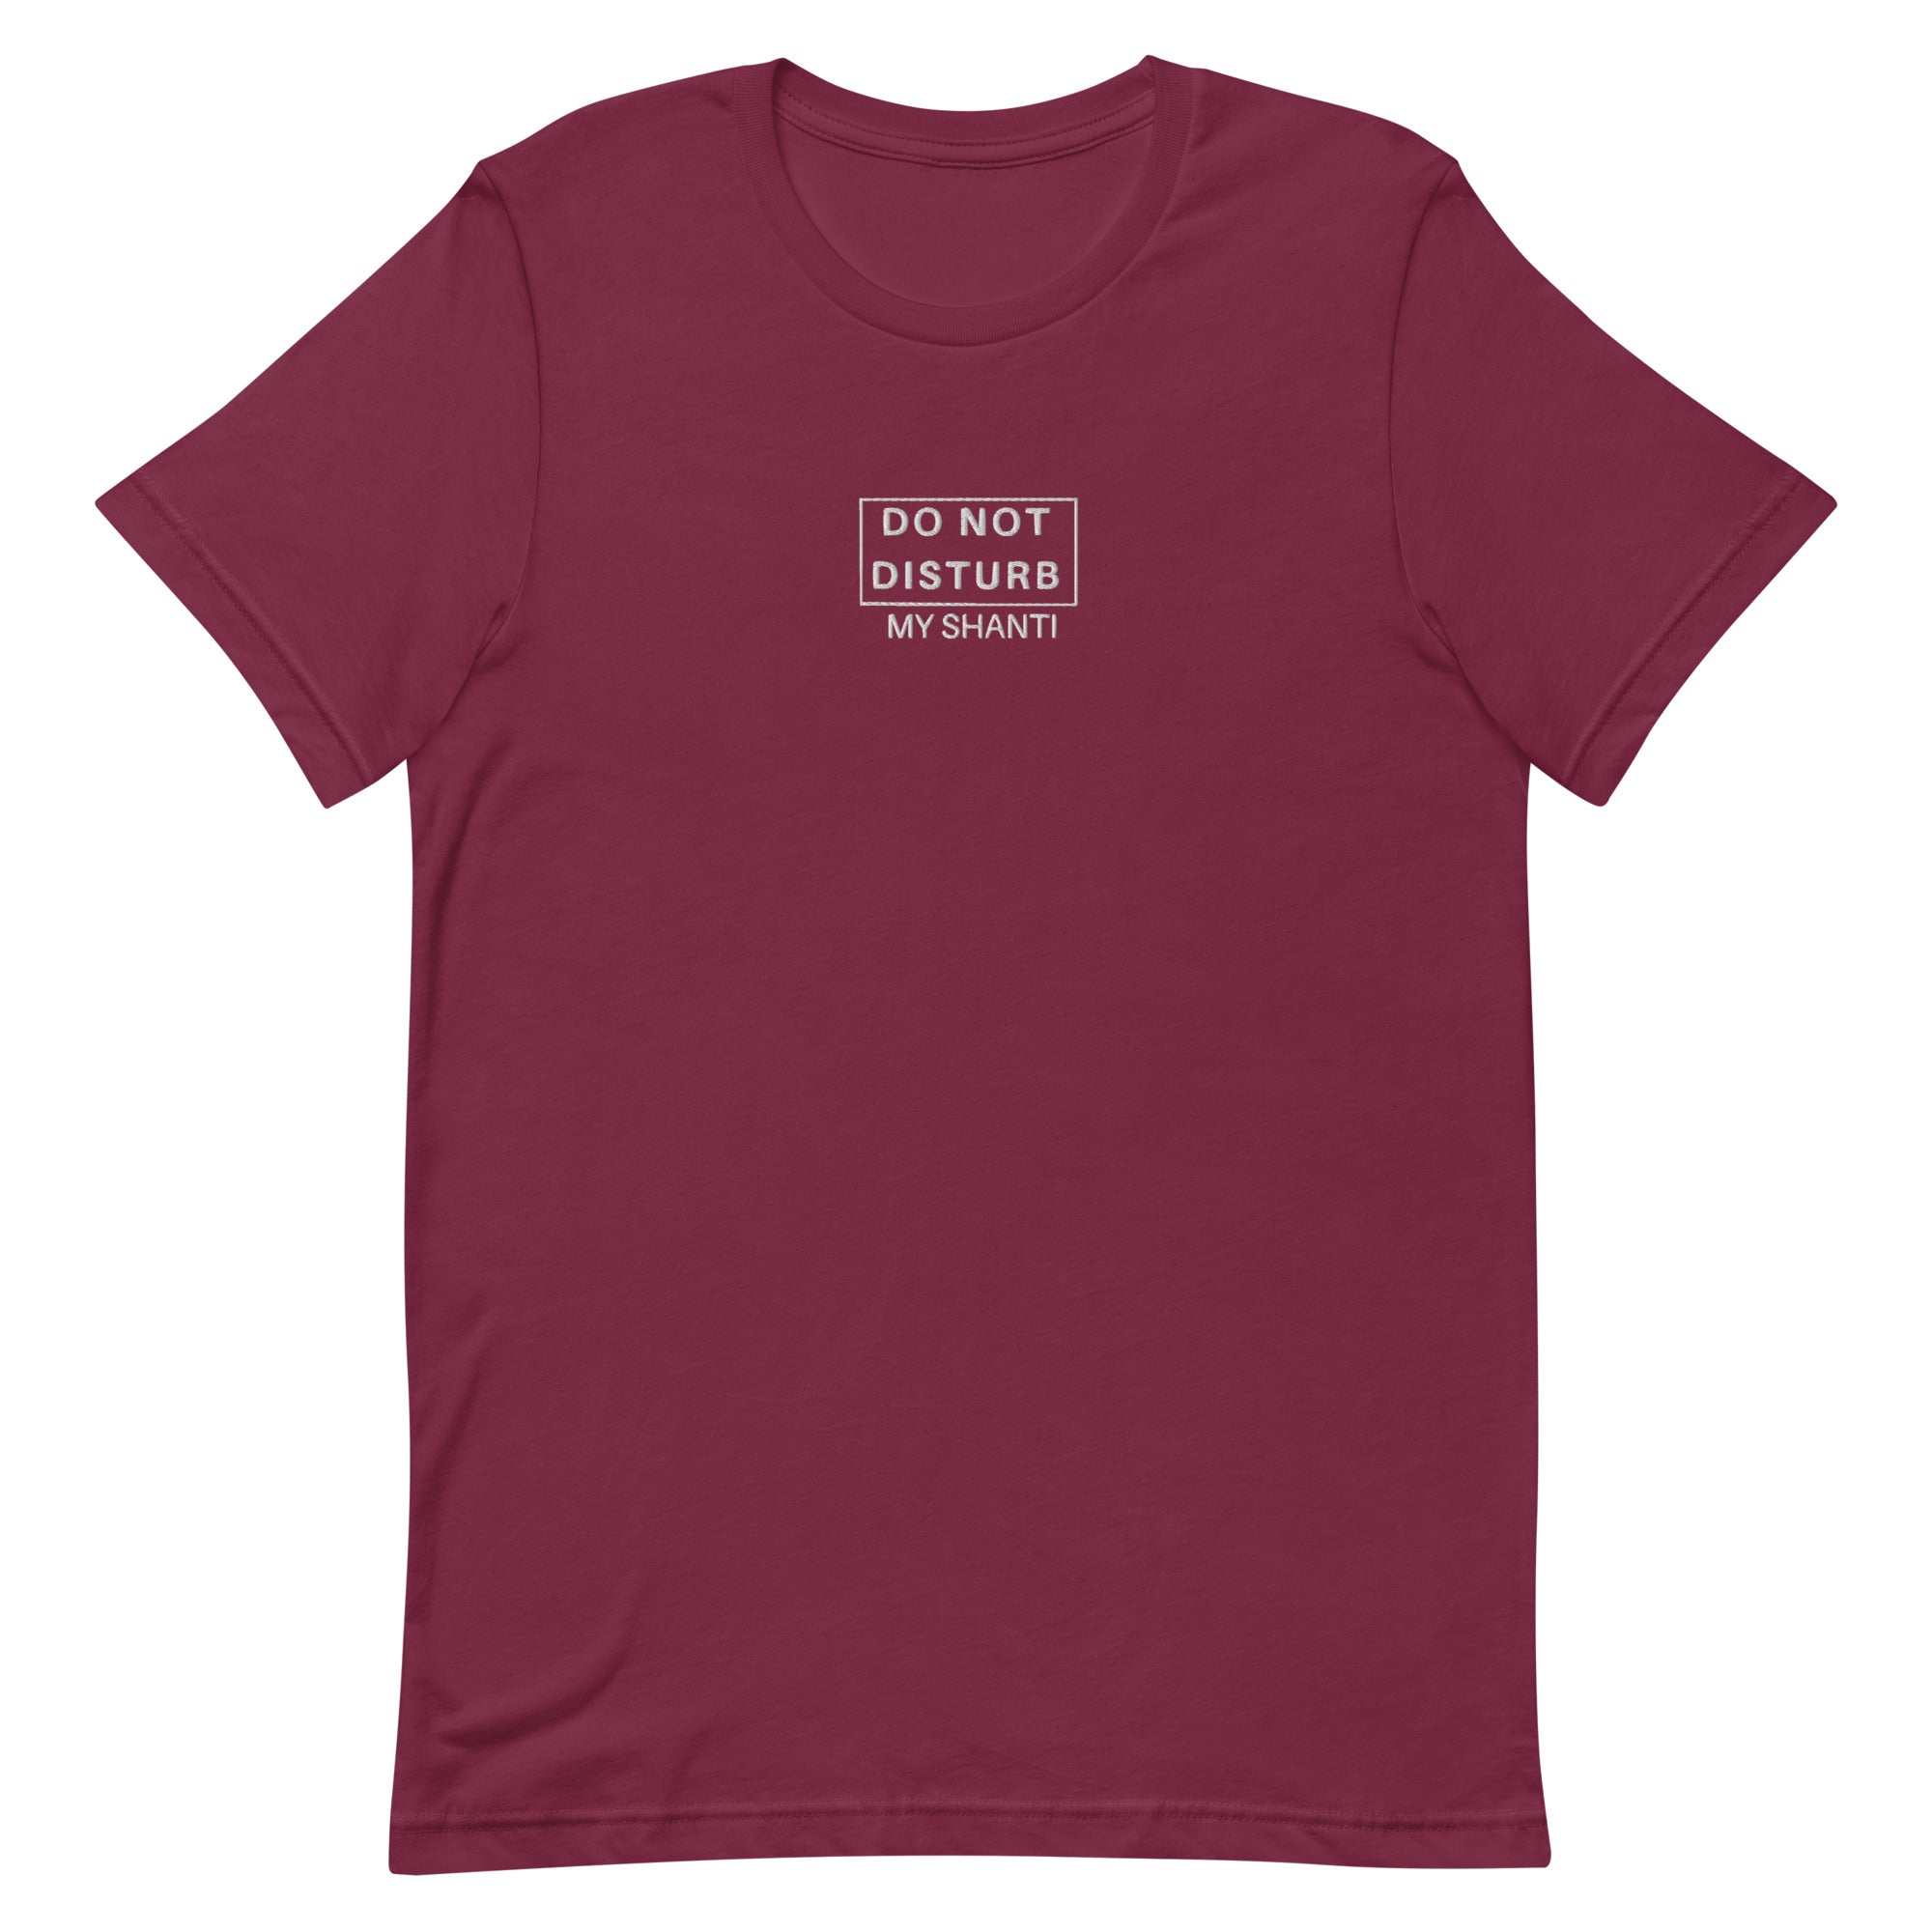 DO NOT DISTURB MY SHANTI Unisex t-shirt